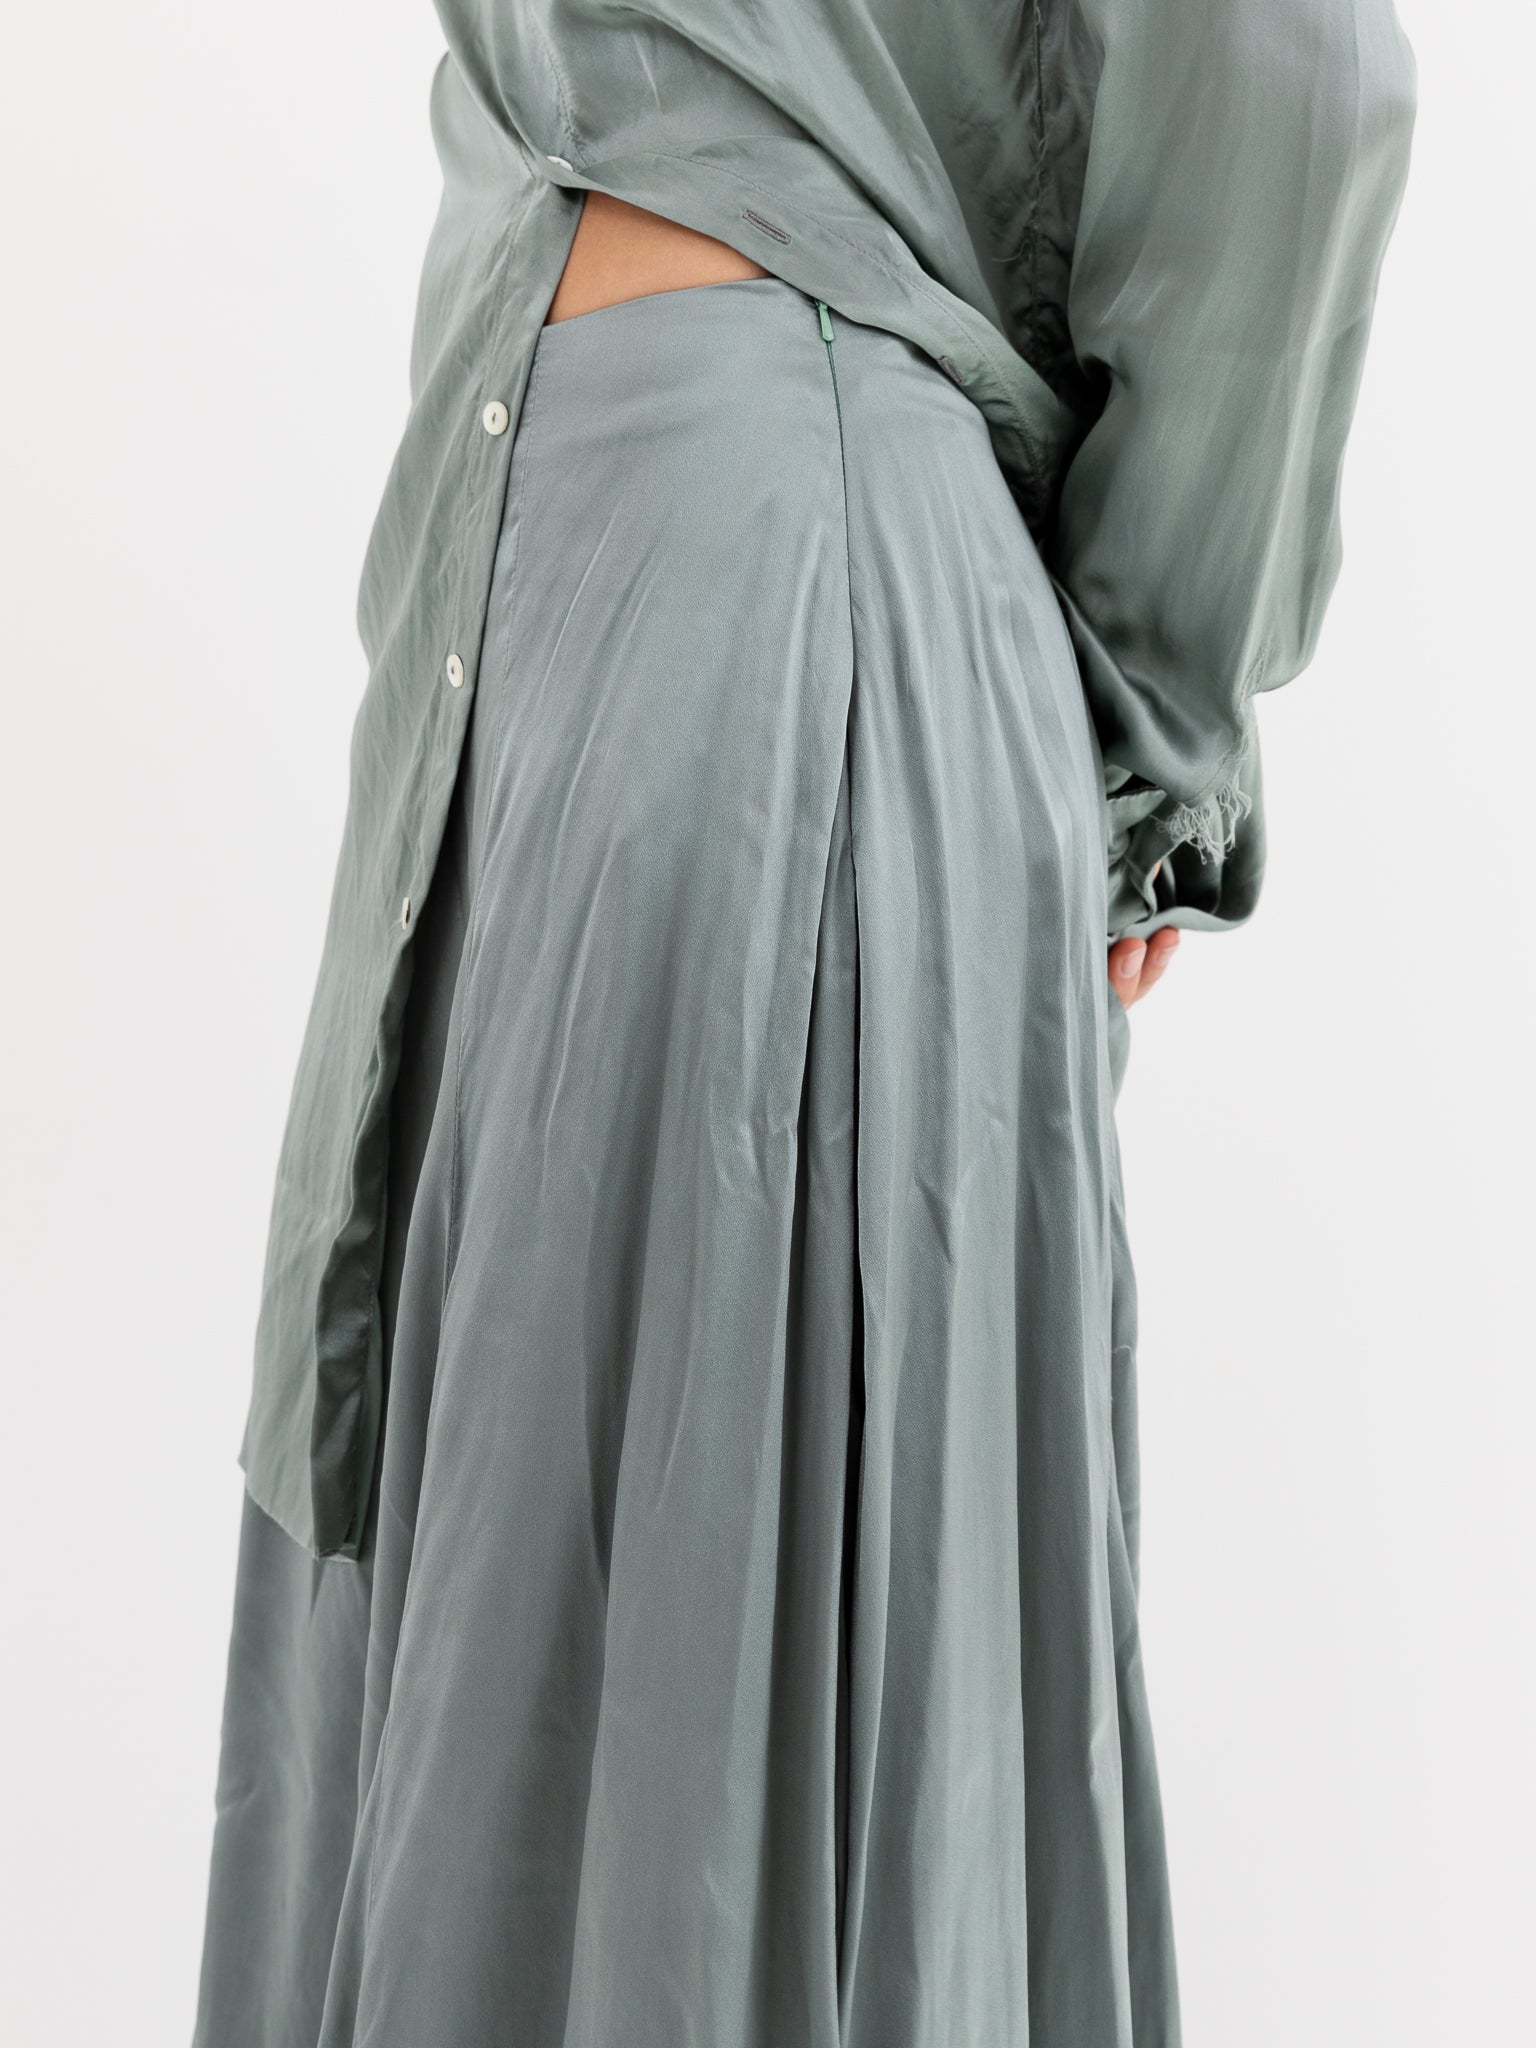 Elena Dawson Tea Skirt in Teardrop - Worthwhile, Inc.